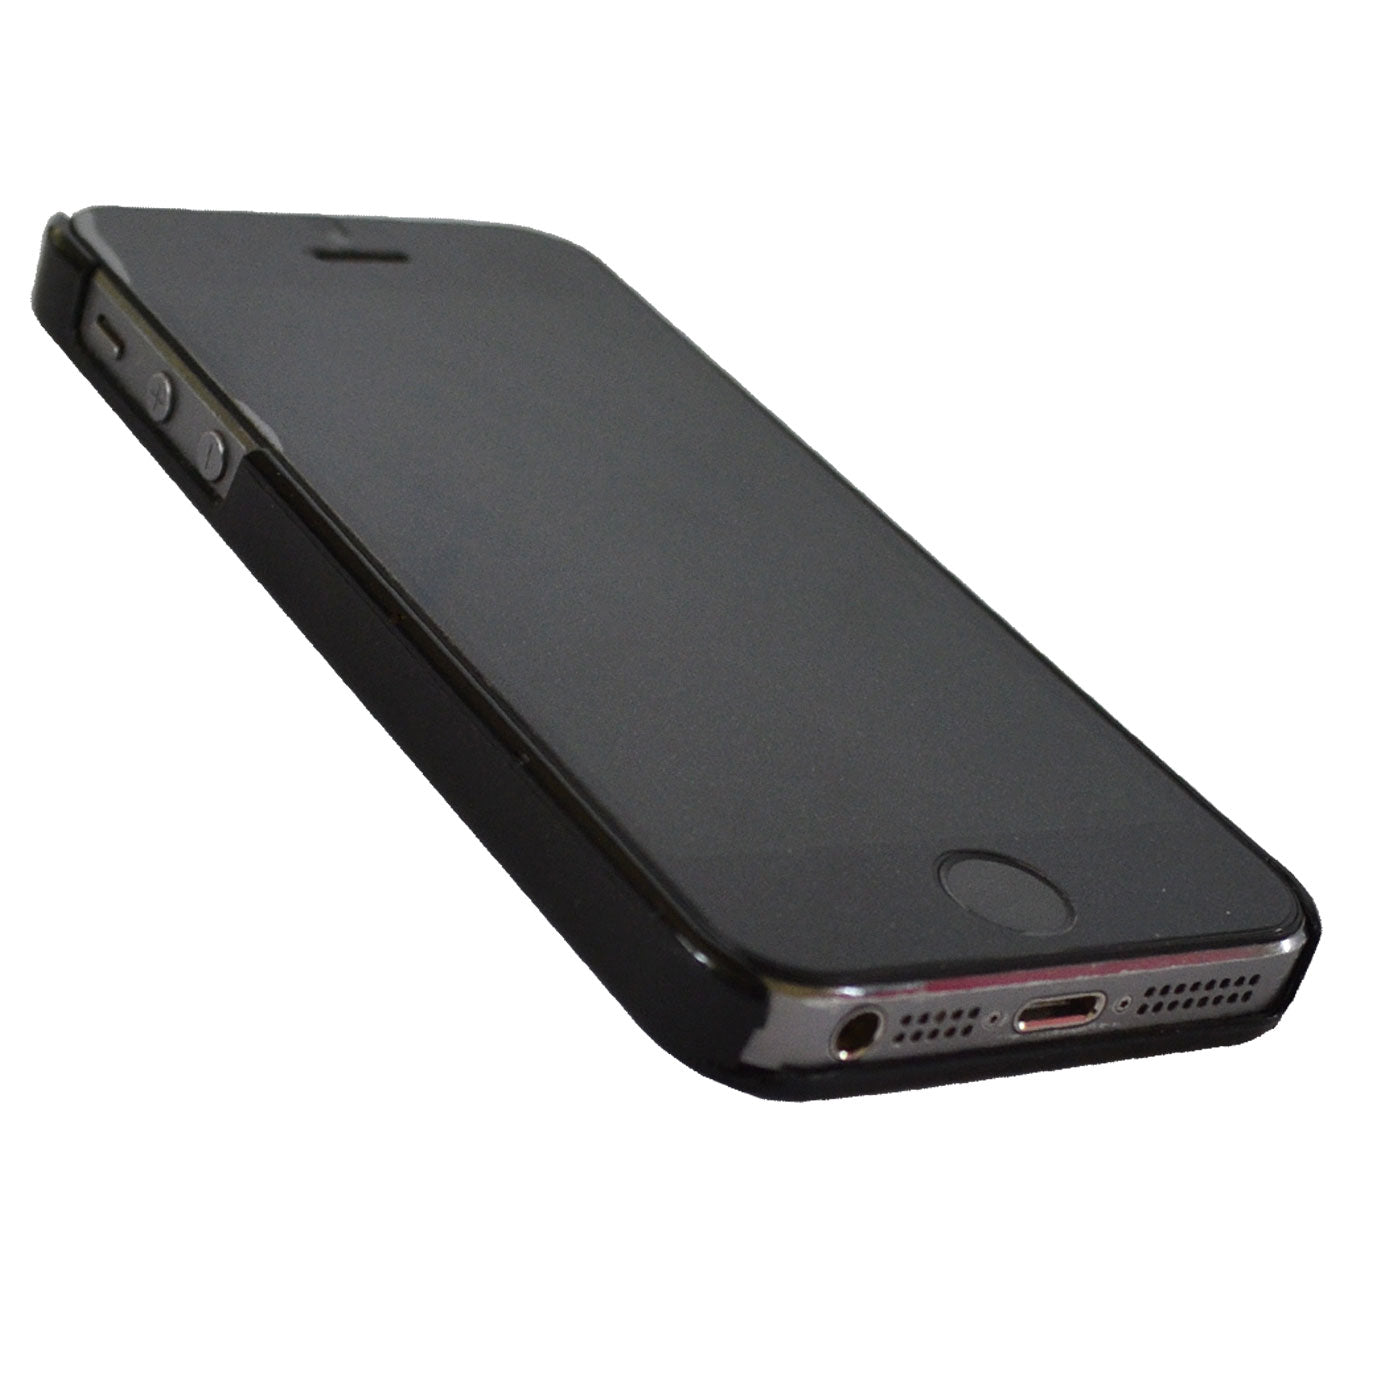 Sleek iphone 5 case